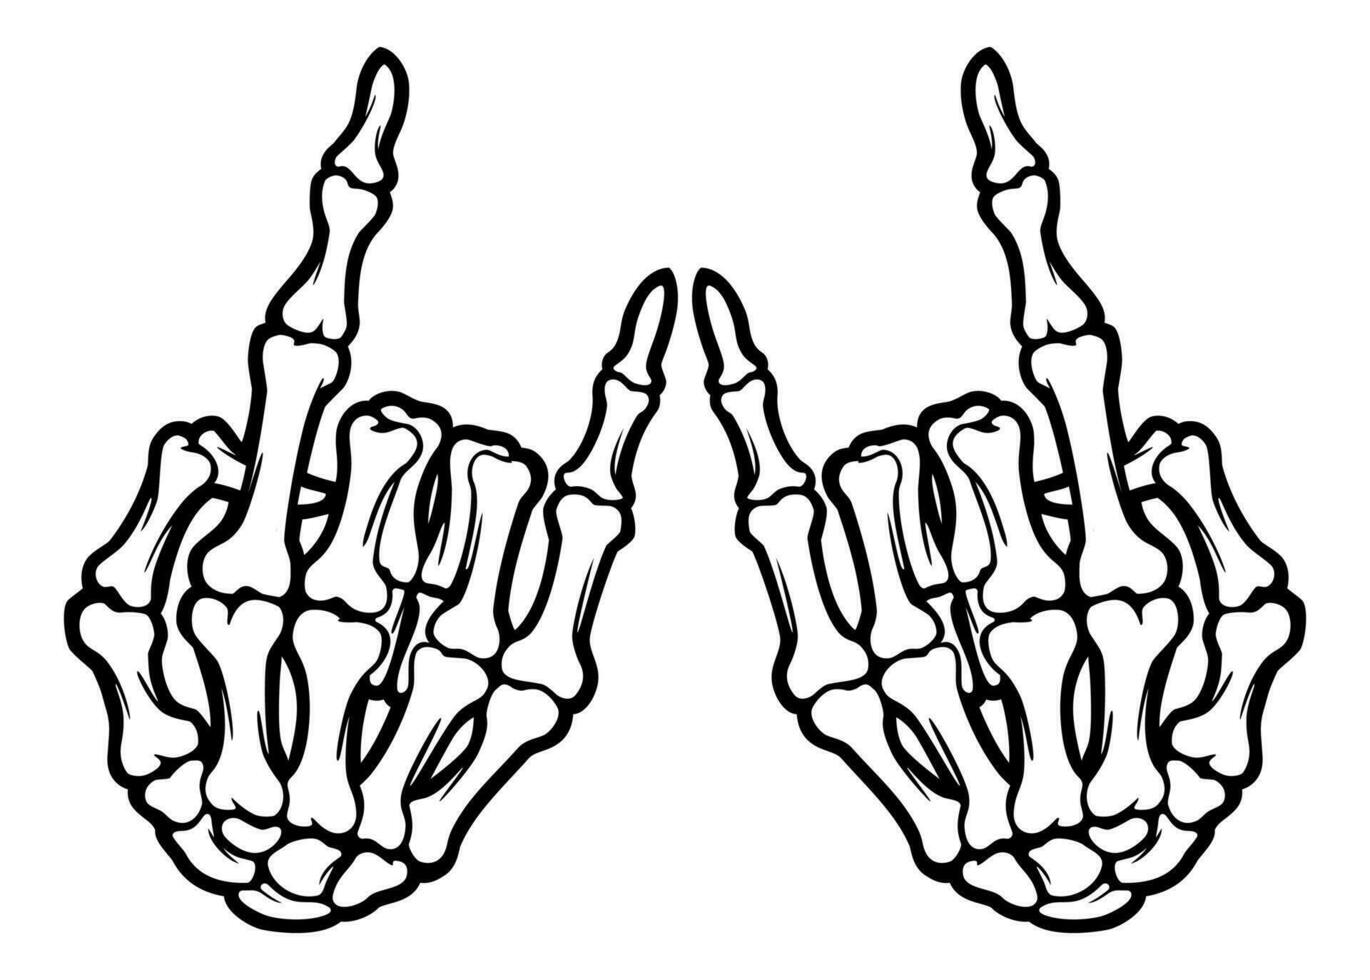 Skeleton bone rock on hand sign illustrations vector